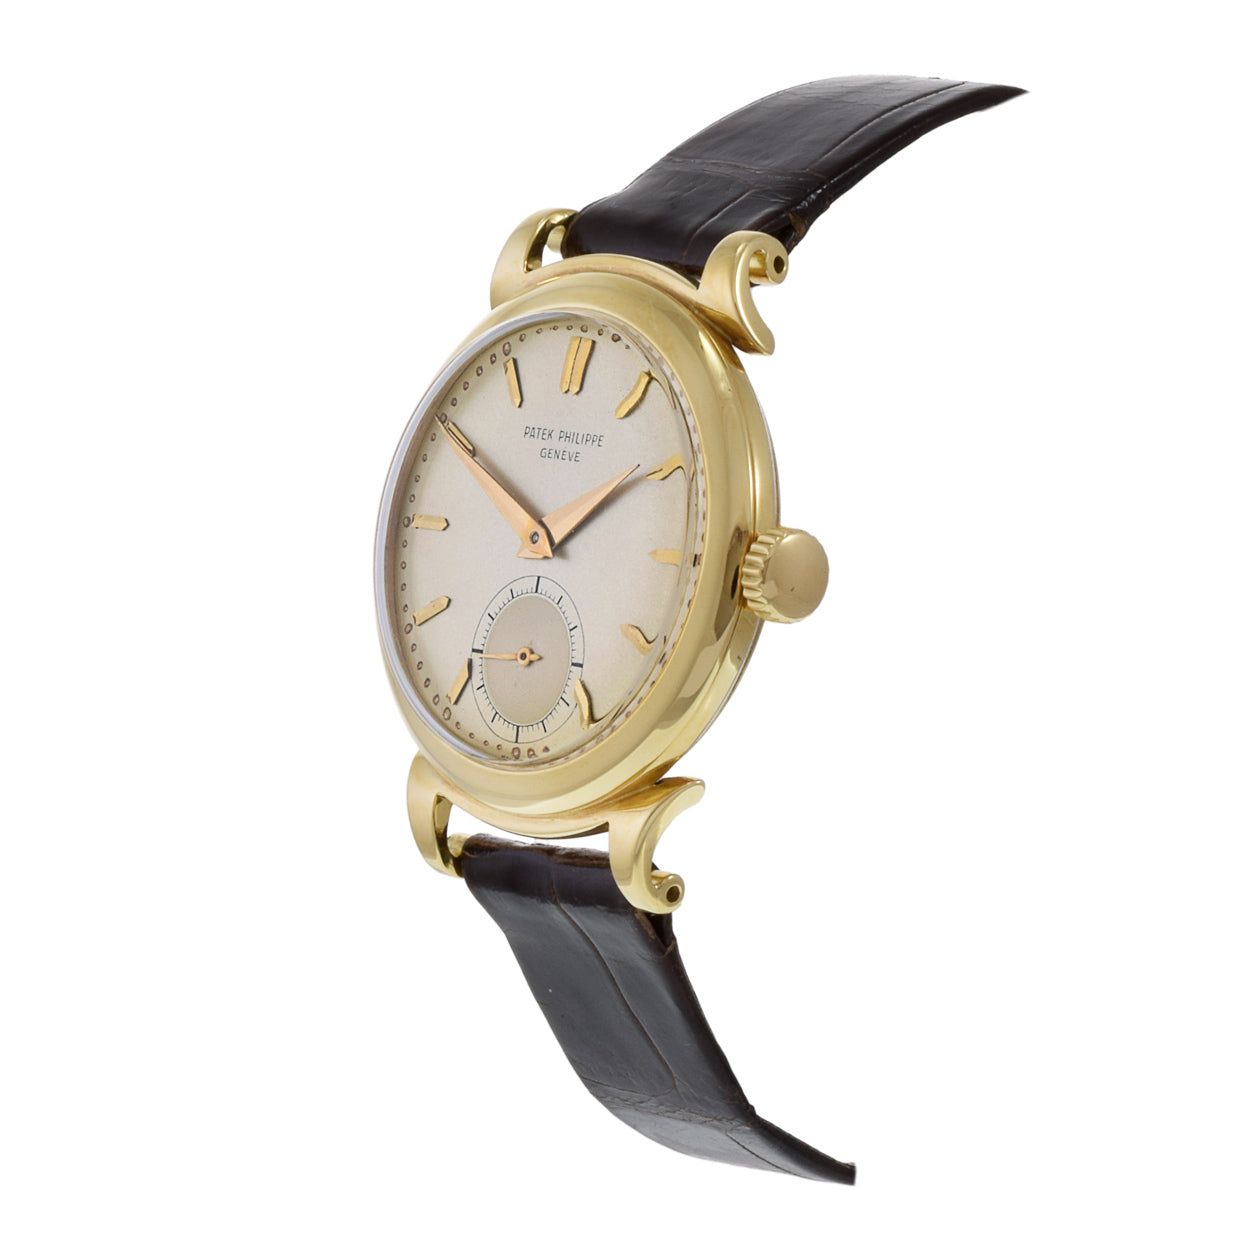 Vintage 1953 Patek Philippe Calatrava 1491 18KT Yellow Gold watch